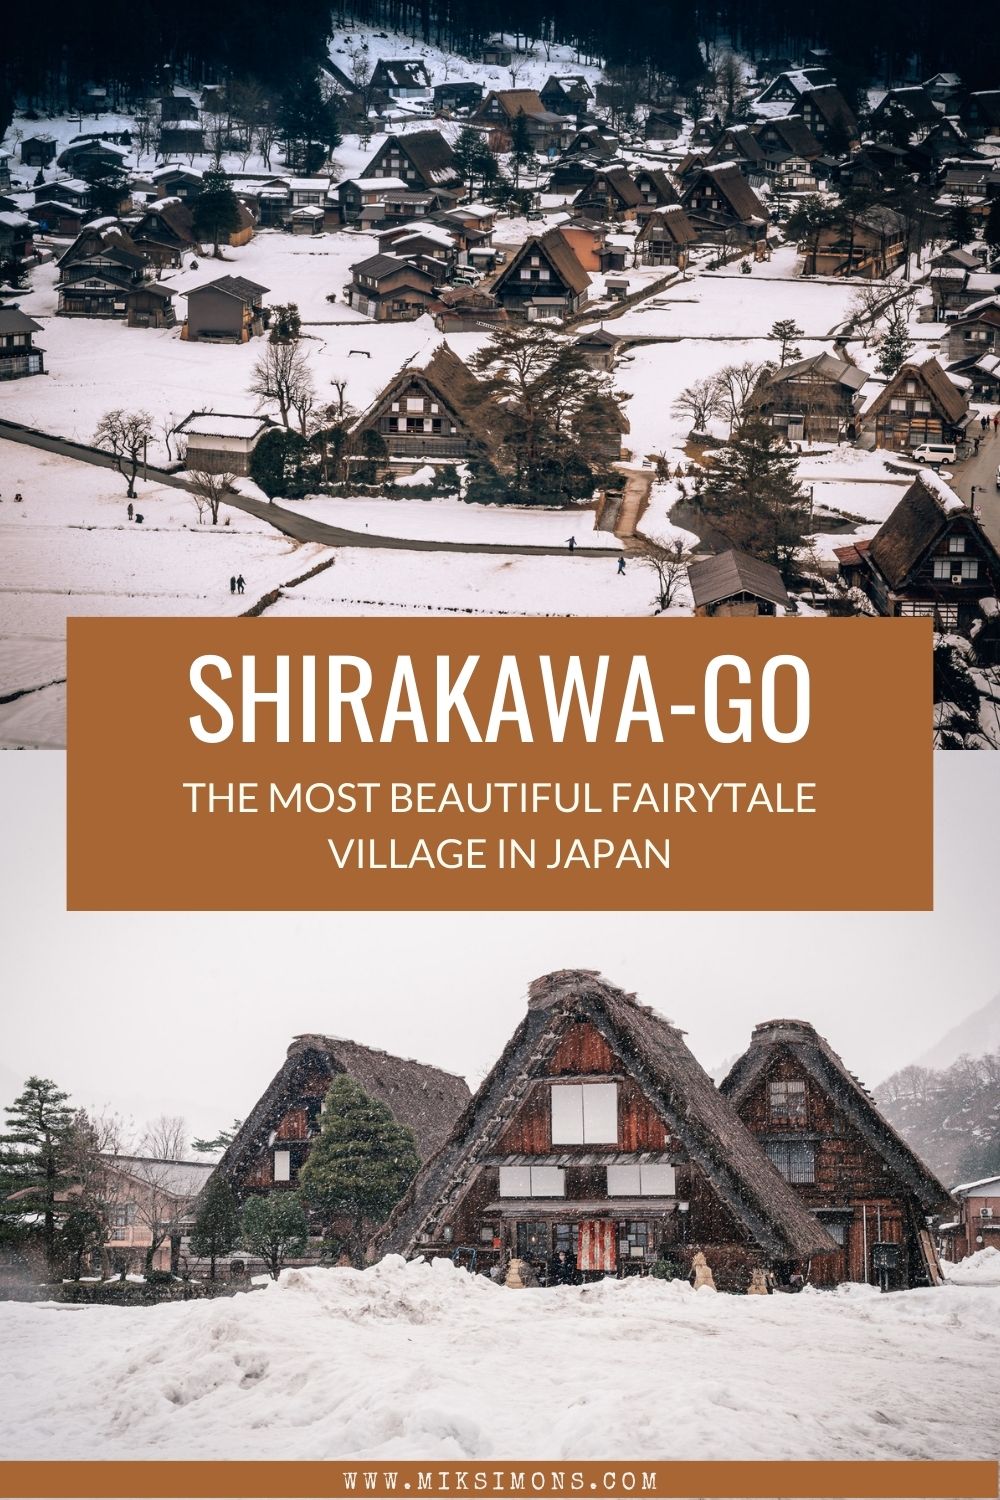 Shirakawa-go in Japan - 5 great reasons to visit this fairytale village1